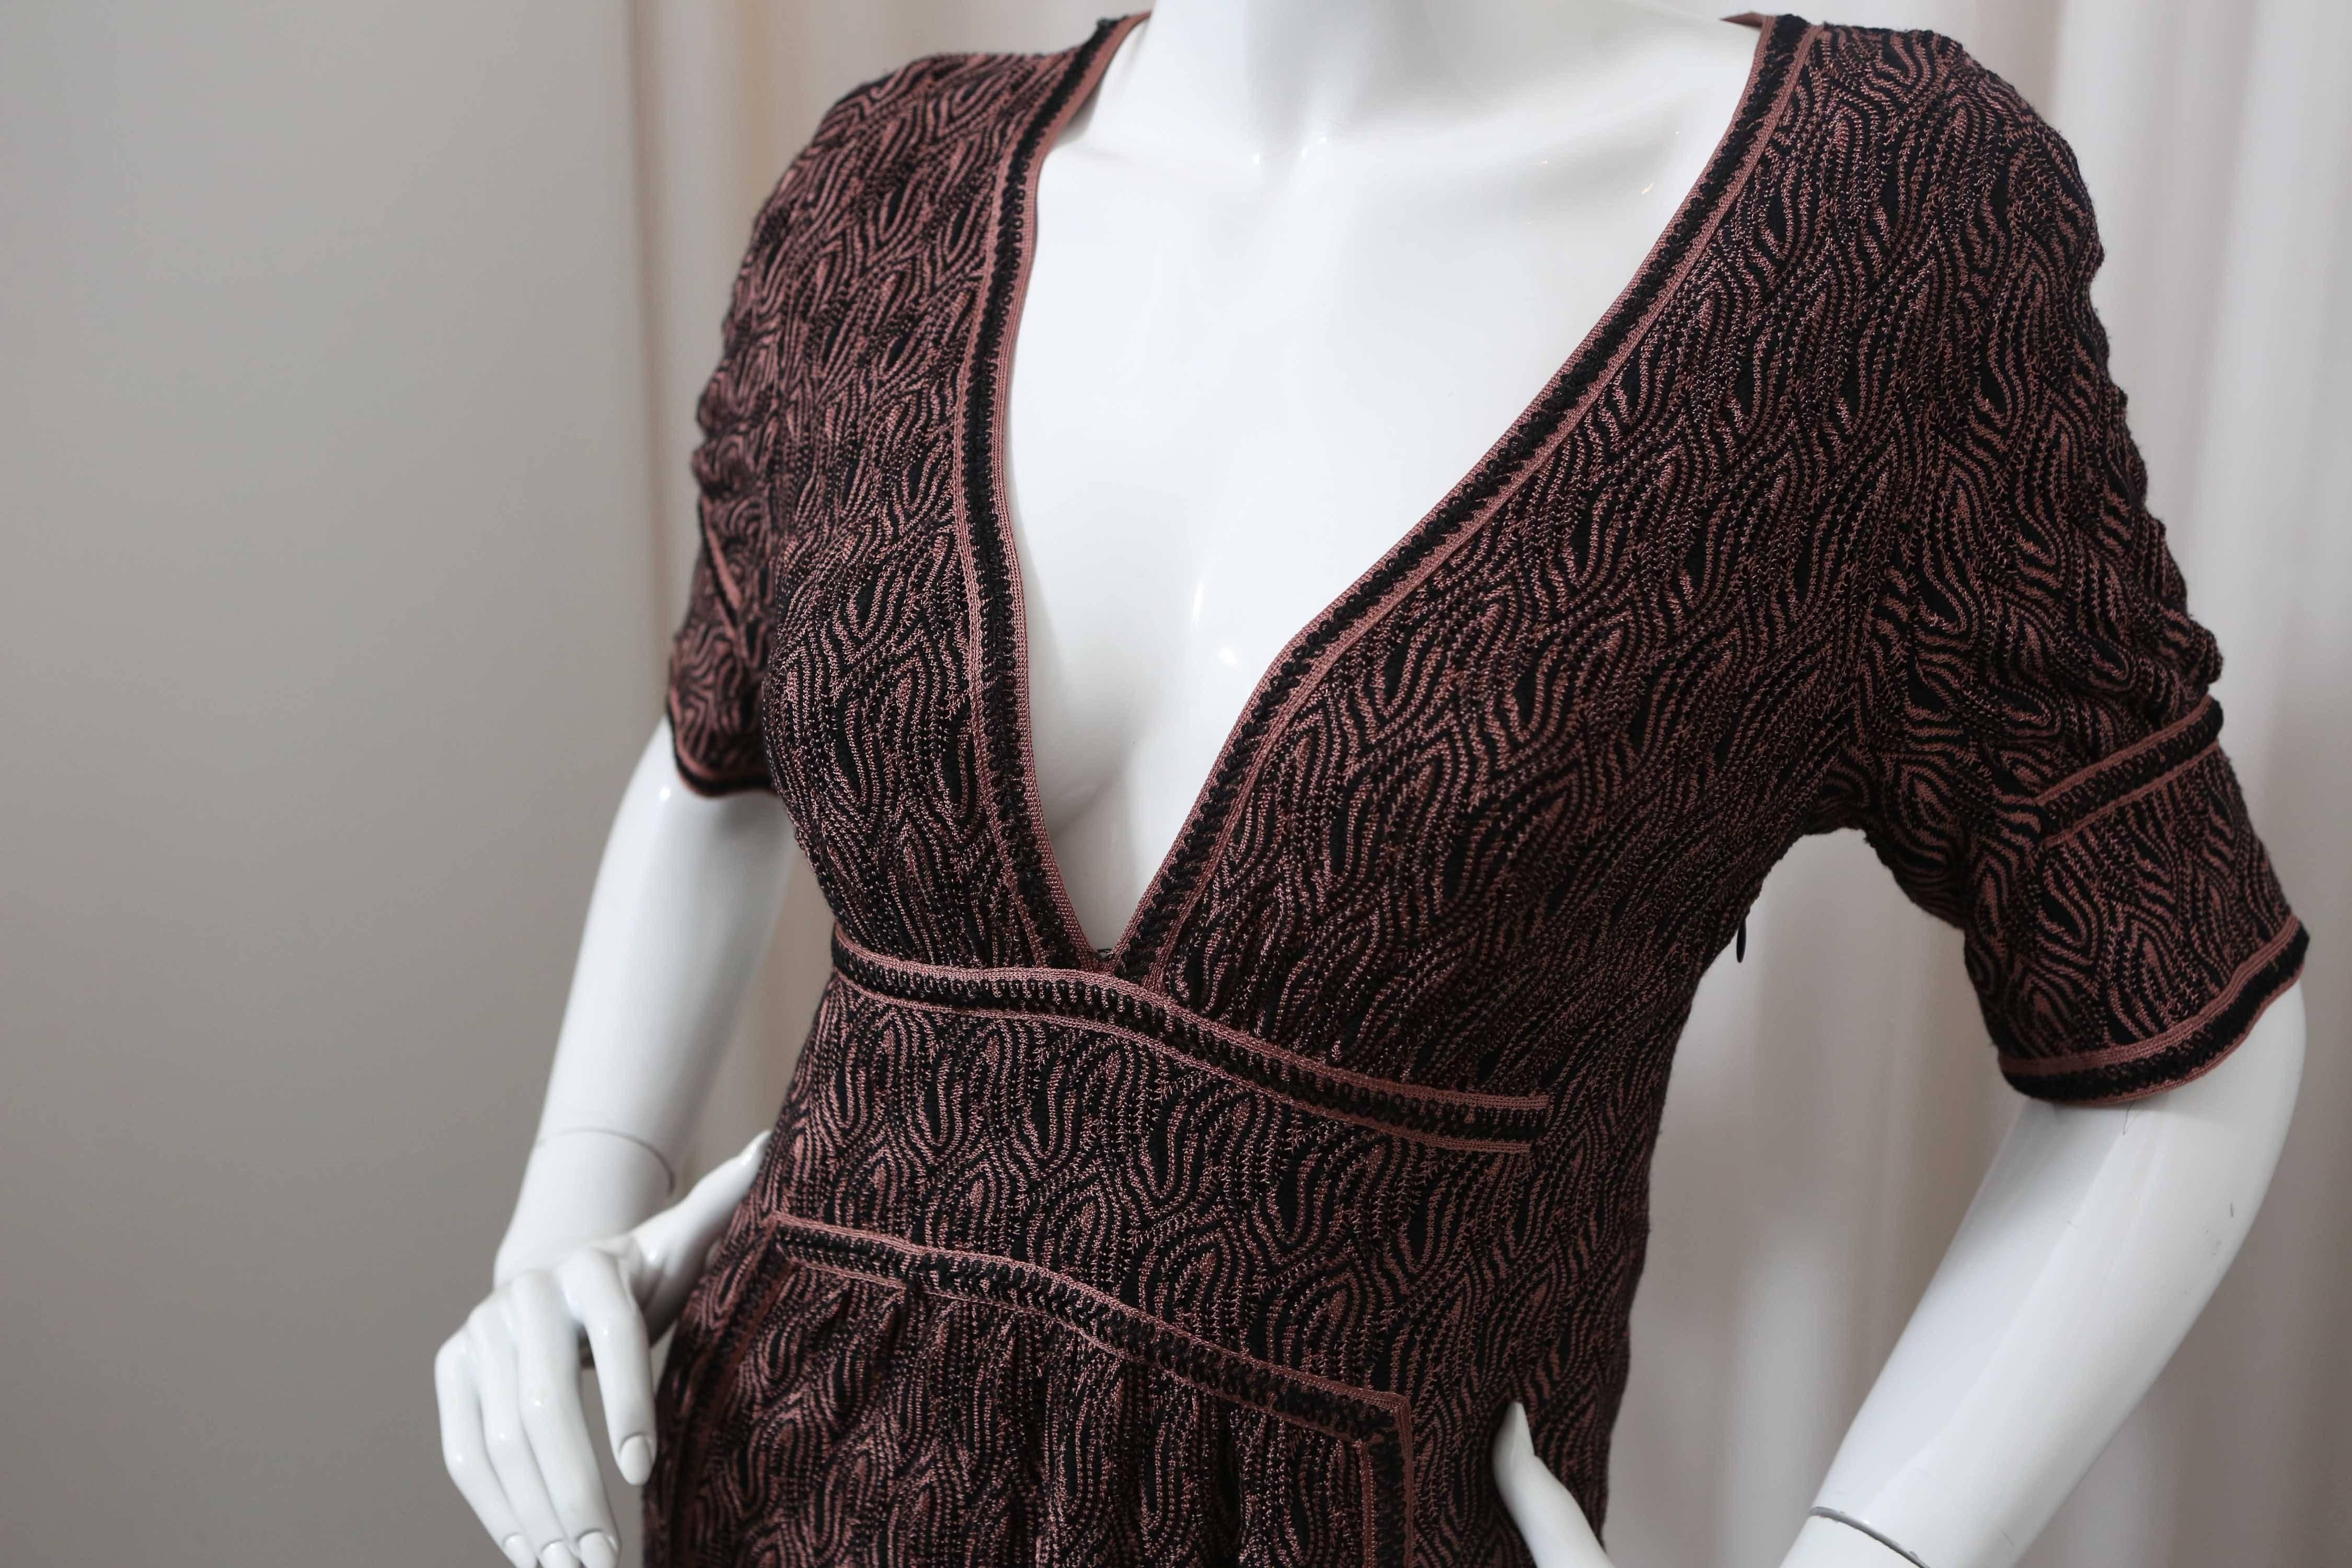 Black and brown silk knit tunic dress.